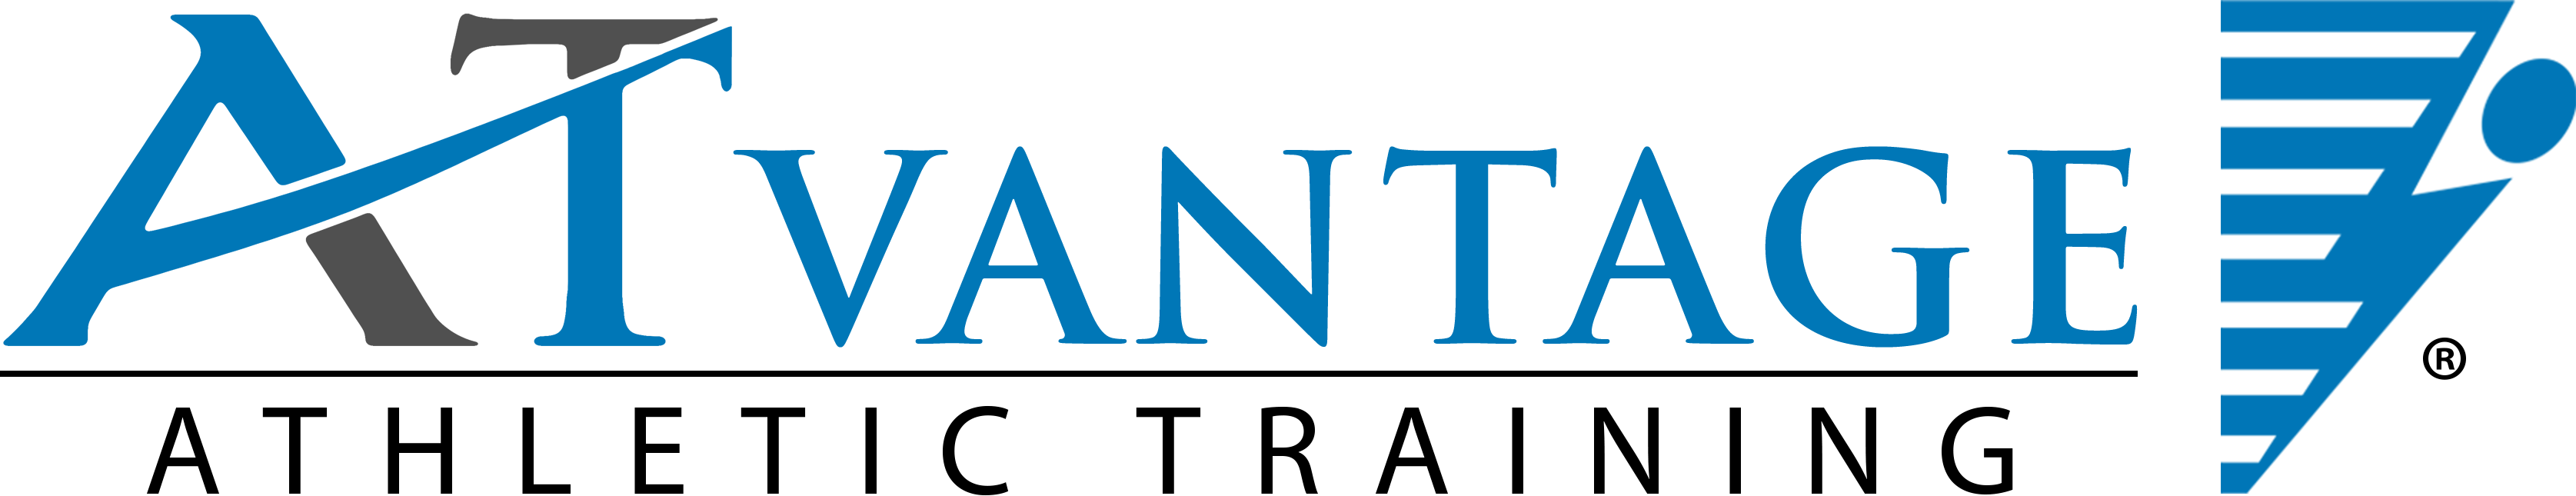 ATvantage logo